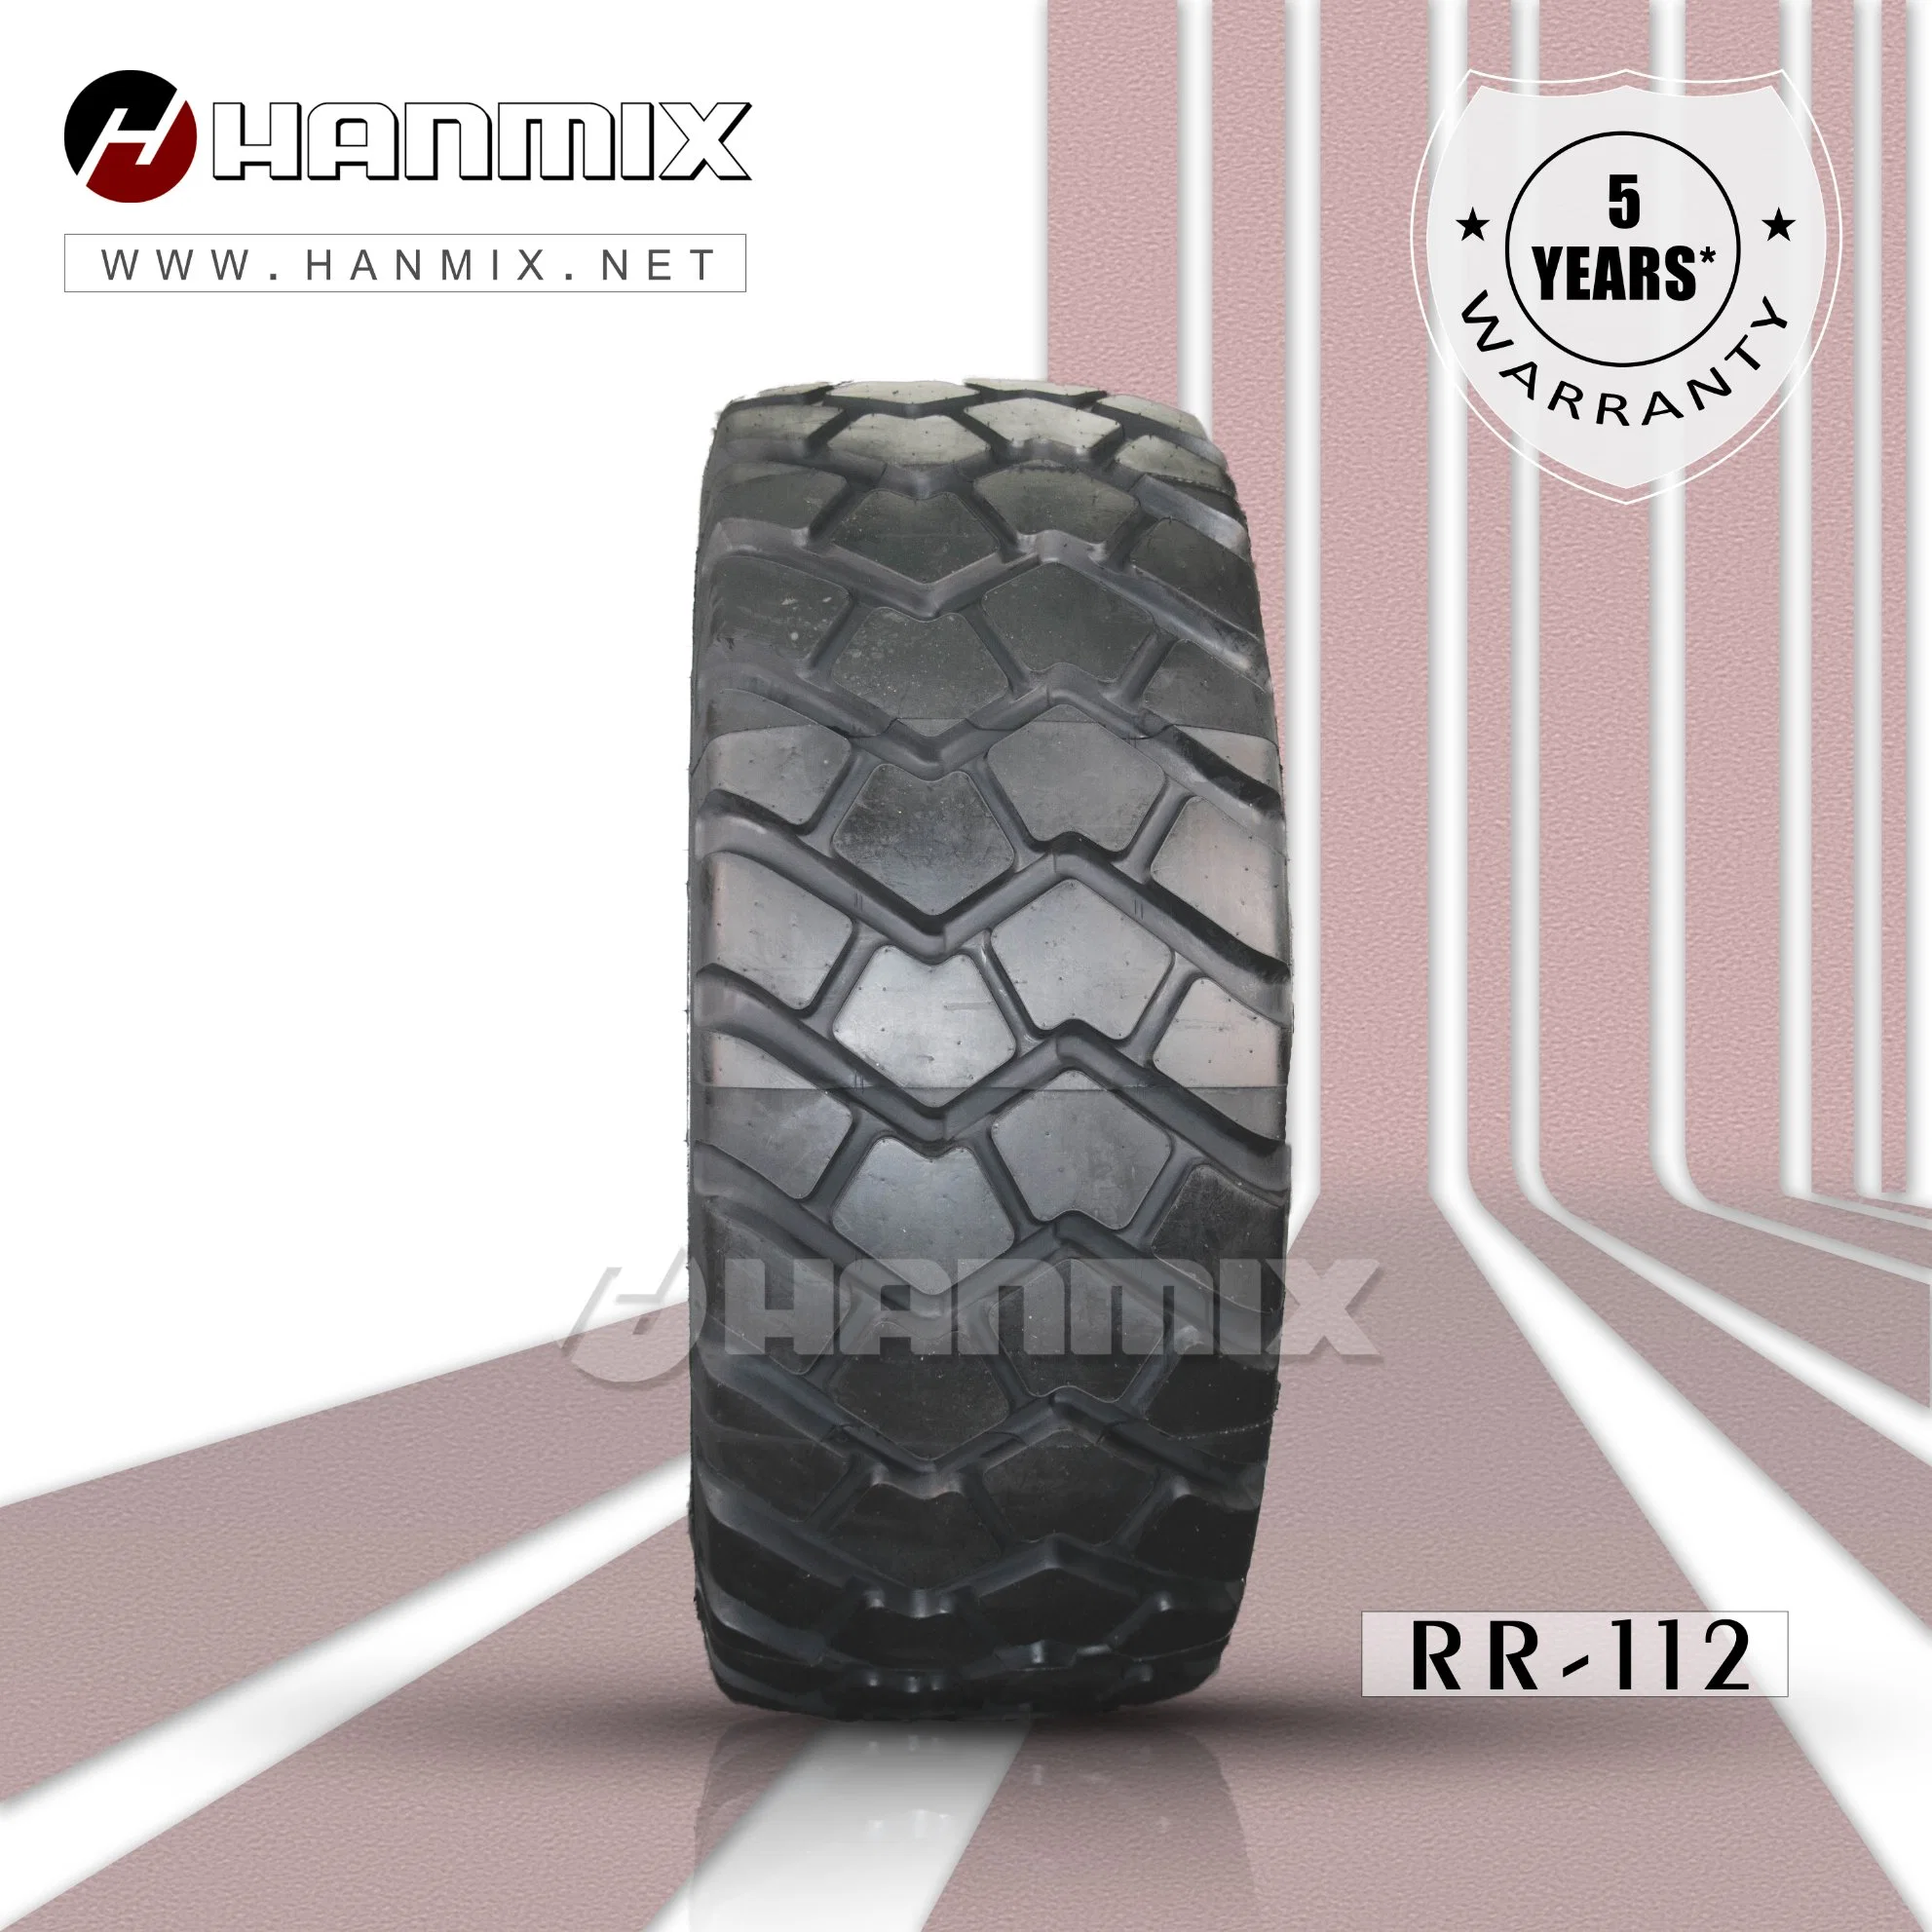 Les pneus radiaux Hanmix OTR sur Dumper niveleuse chargeuse bulldozer mines E3 L3 E3/L3 E4 E4/L4 L5 L5s 13.00r25 14.00r24 14.00r25 17,5R25 20.5R25 26,5 R25 29.5R25